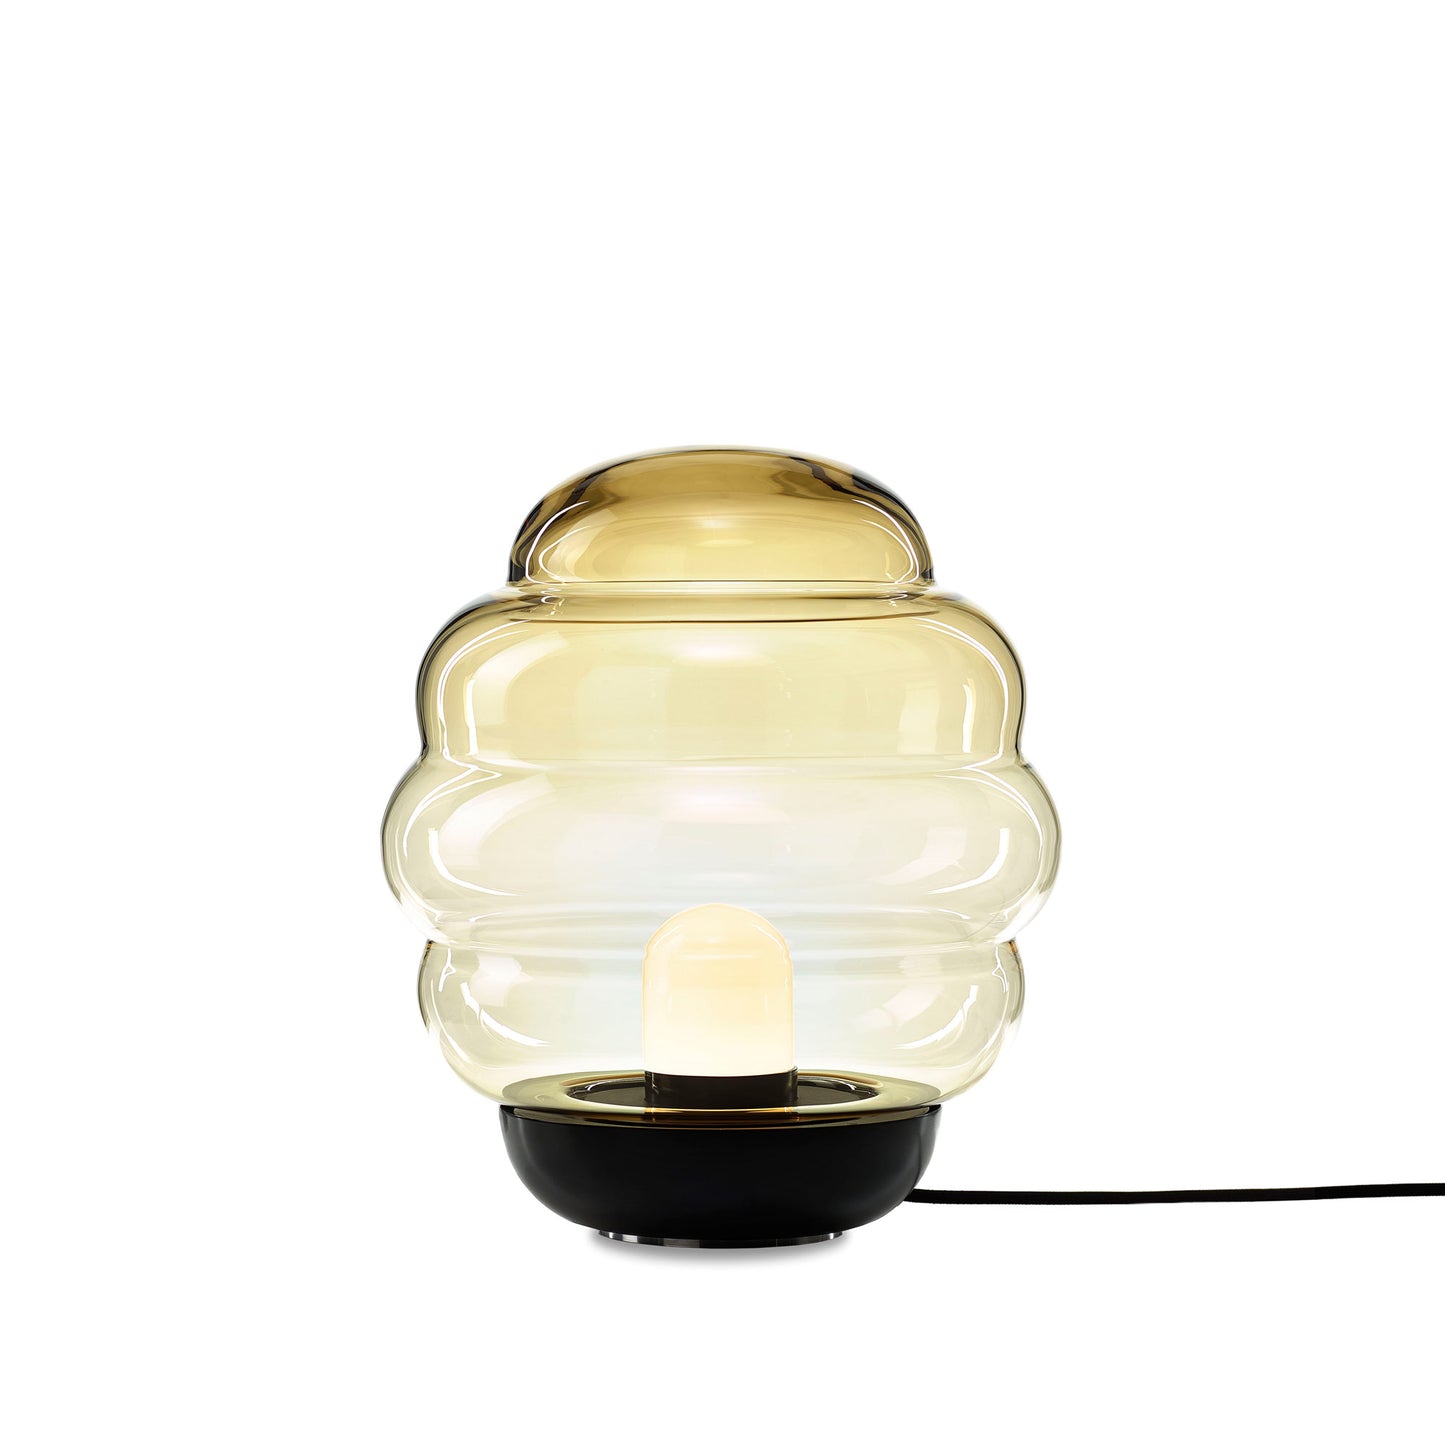 BOMMA - BLIMP FLOOR LAMP SMALL -  from $2,668.50